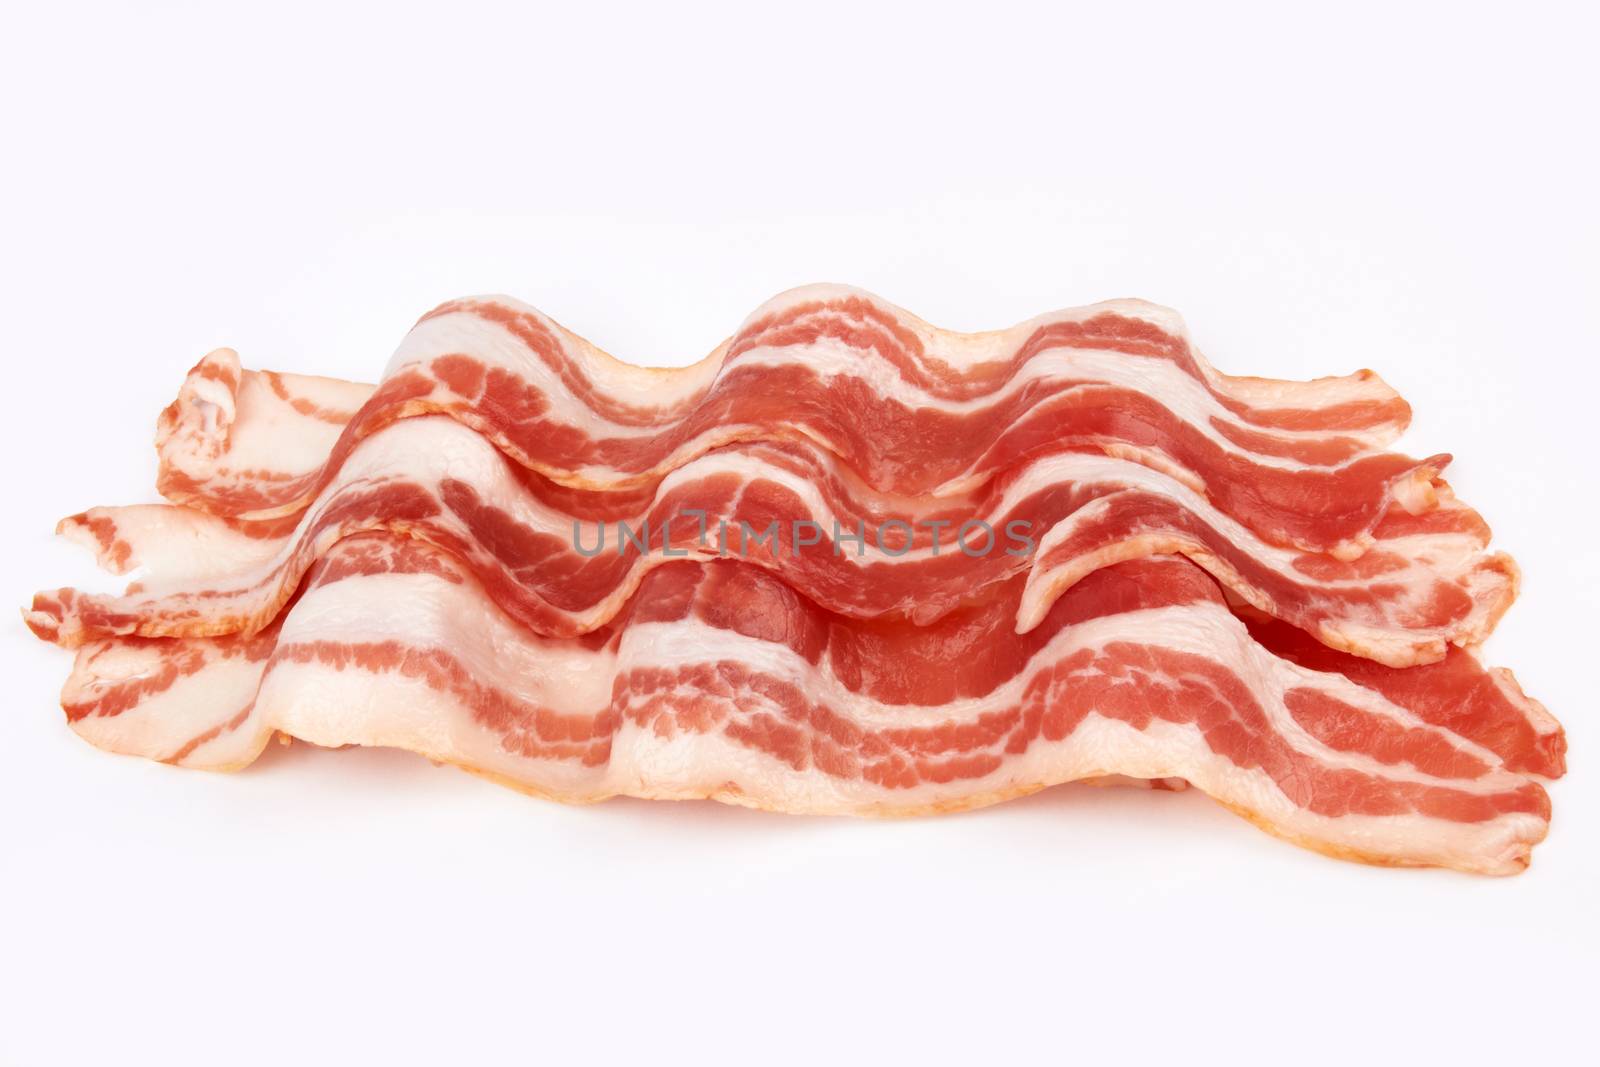 pork bacon by pioneer111